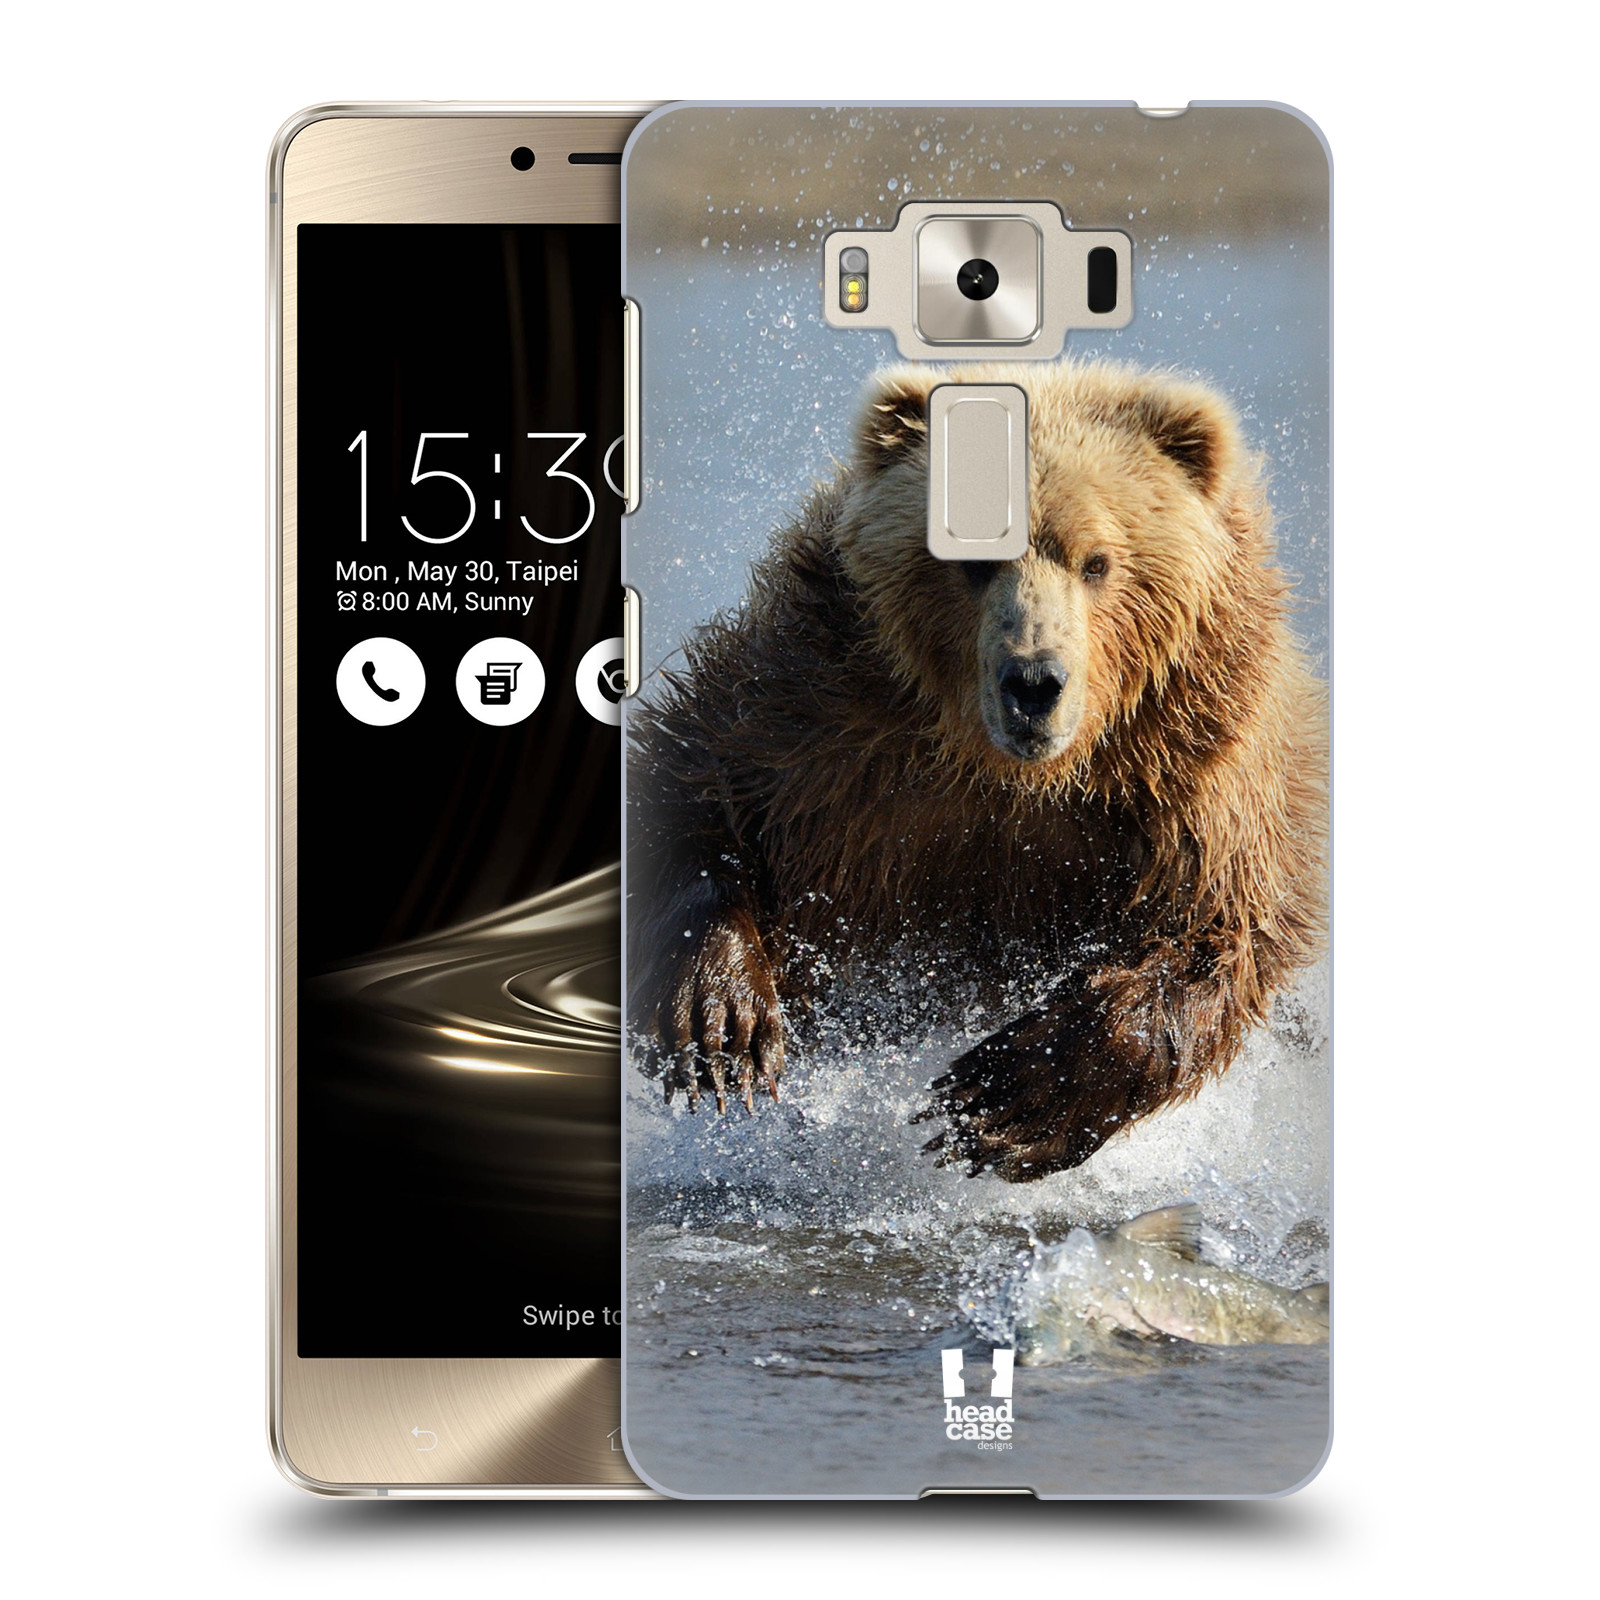 HEAD CASE plastový obal na mobil Asus Zenfone 3 DELUXE ZS550KL vzor Divočina, Divoký život a zvířata foto MEDVĚD GRIZZLY HŇEDÁ